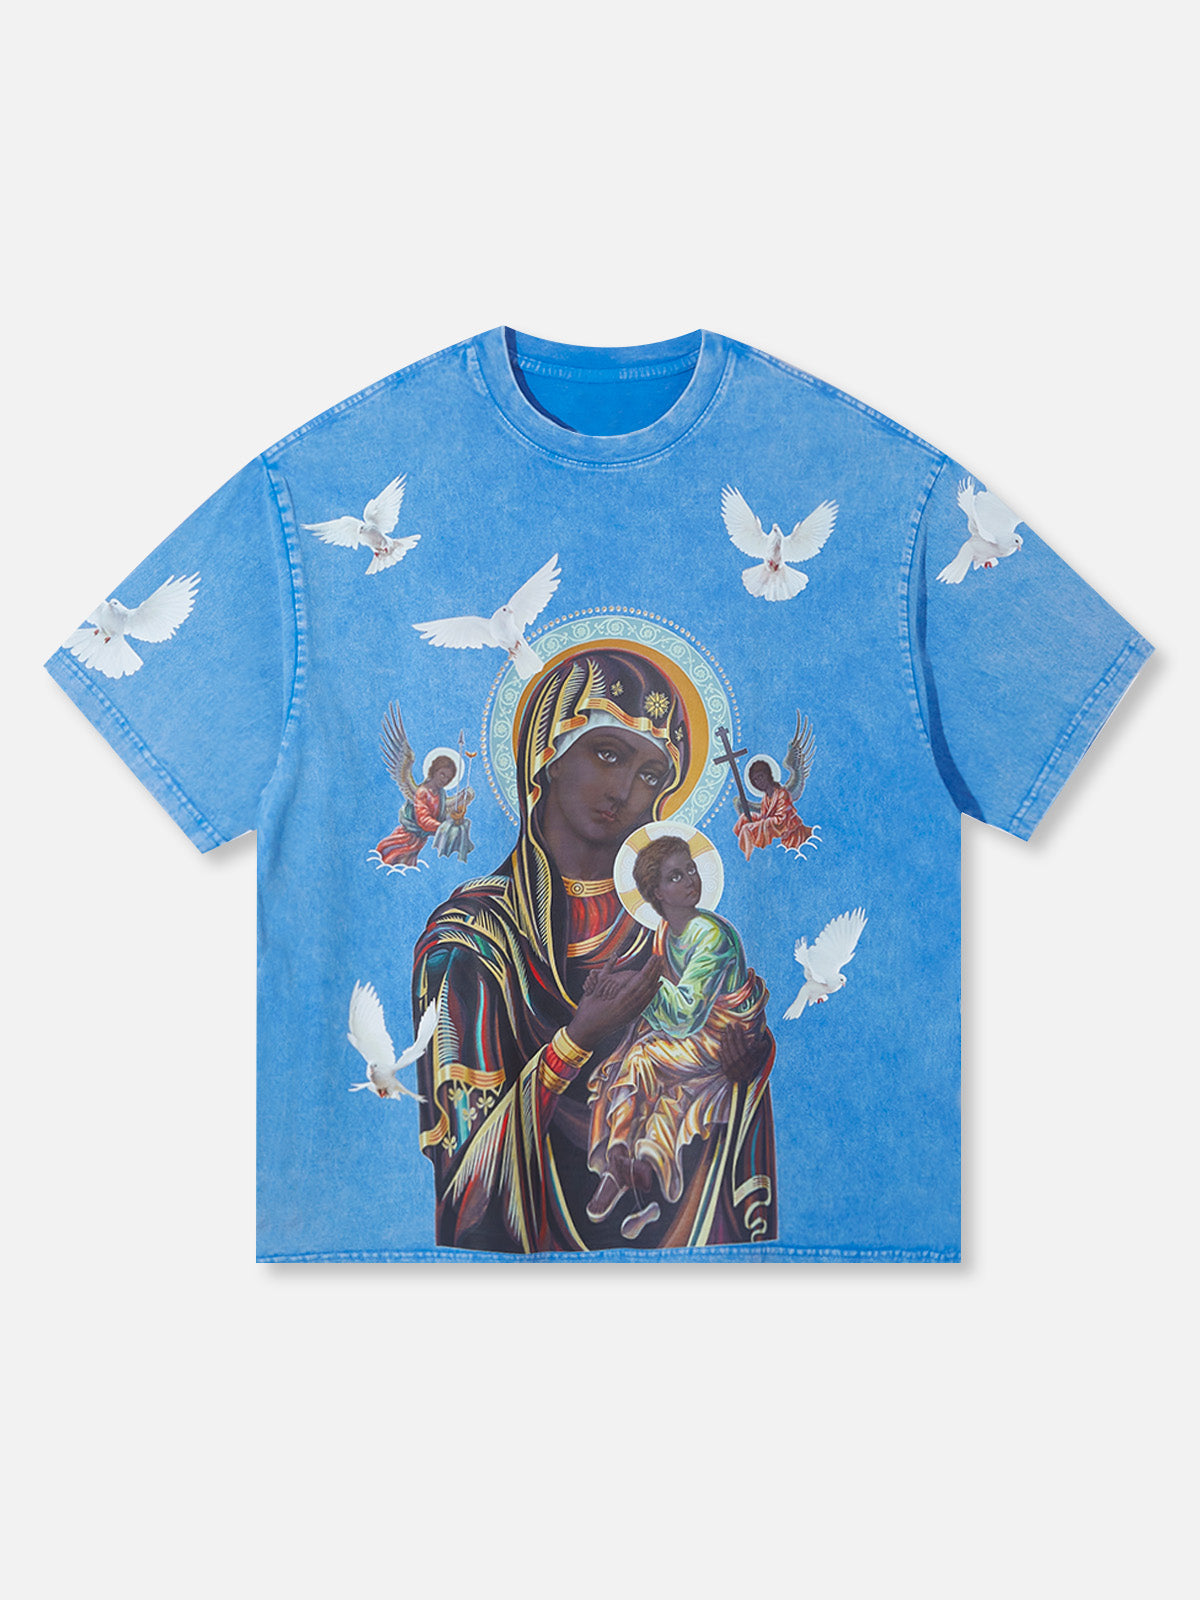 Black Madonna and Child Color Blue T-shirt